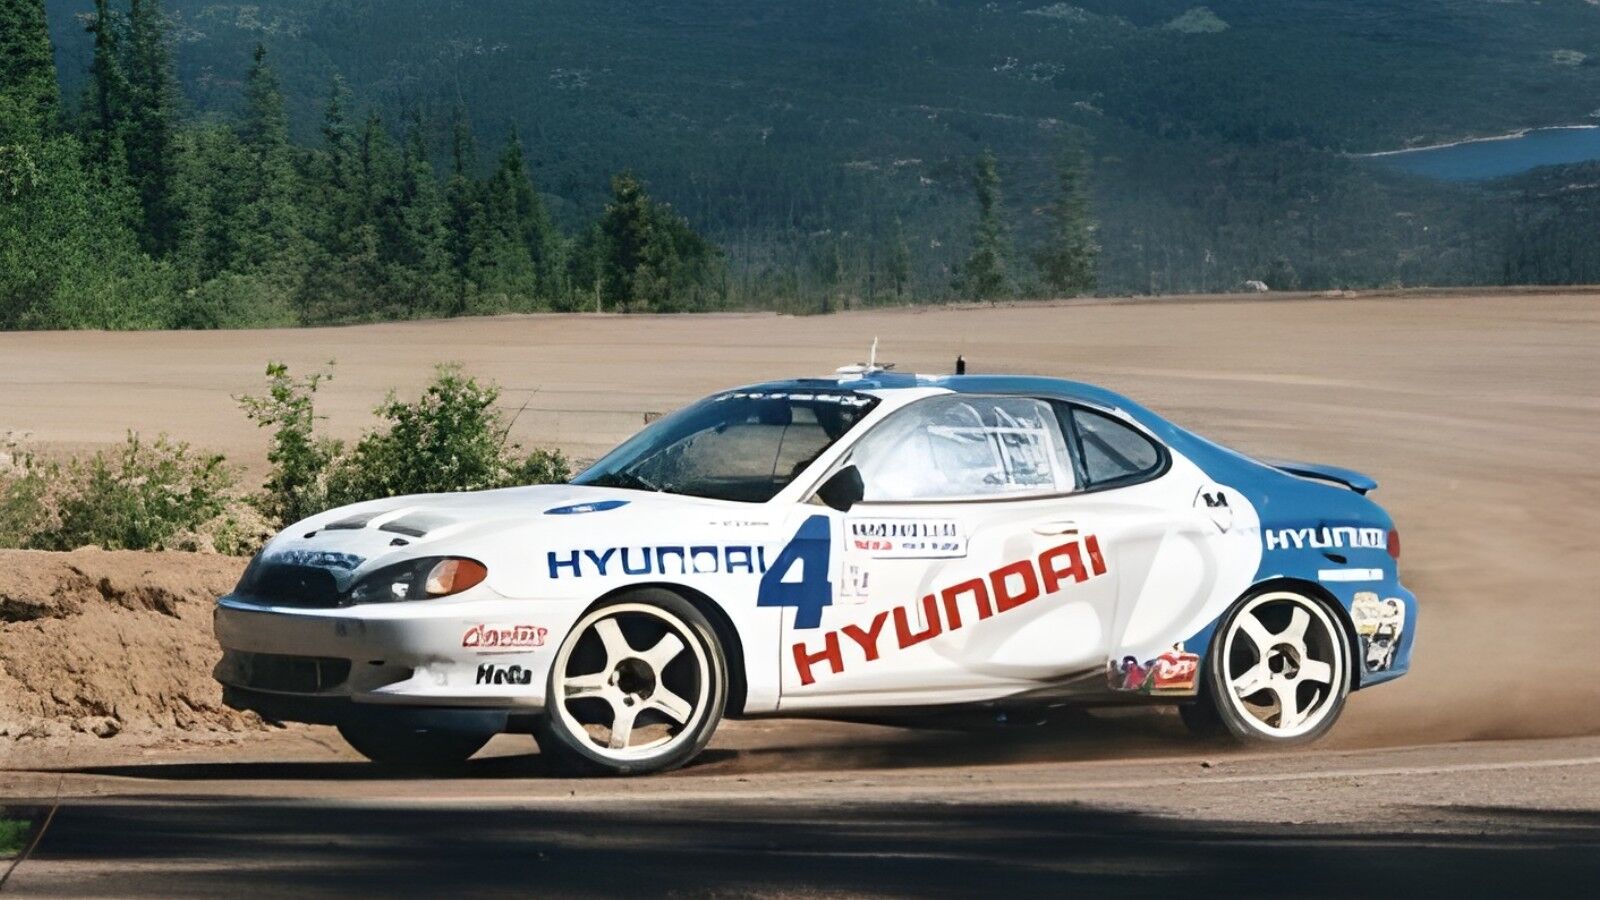 (Image 3) Hyundai Motor Returns to the Pikes Peak International Hill Climb